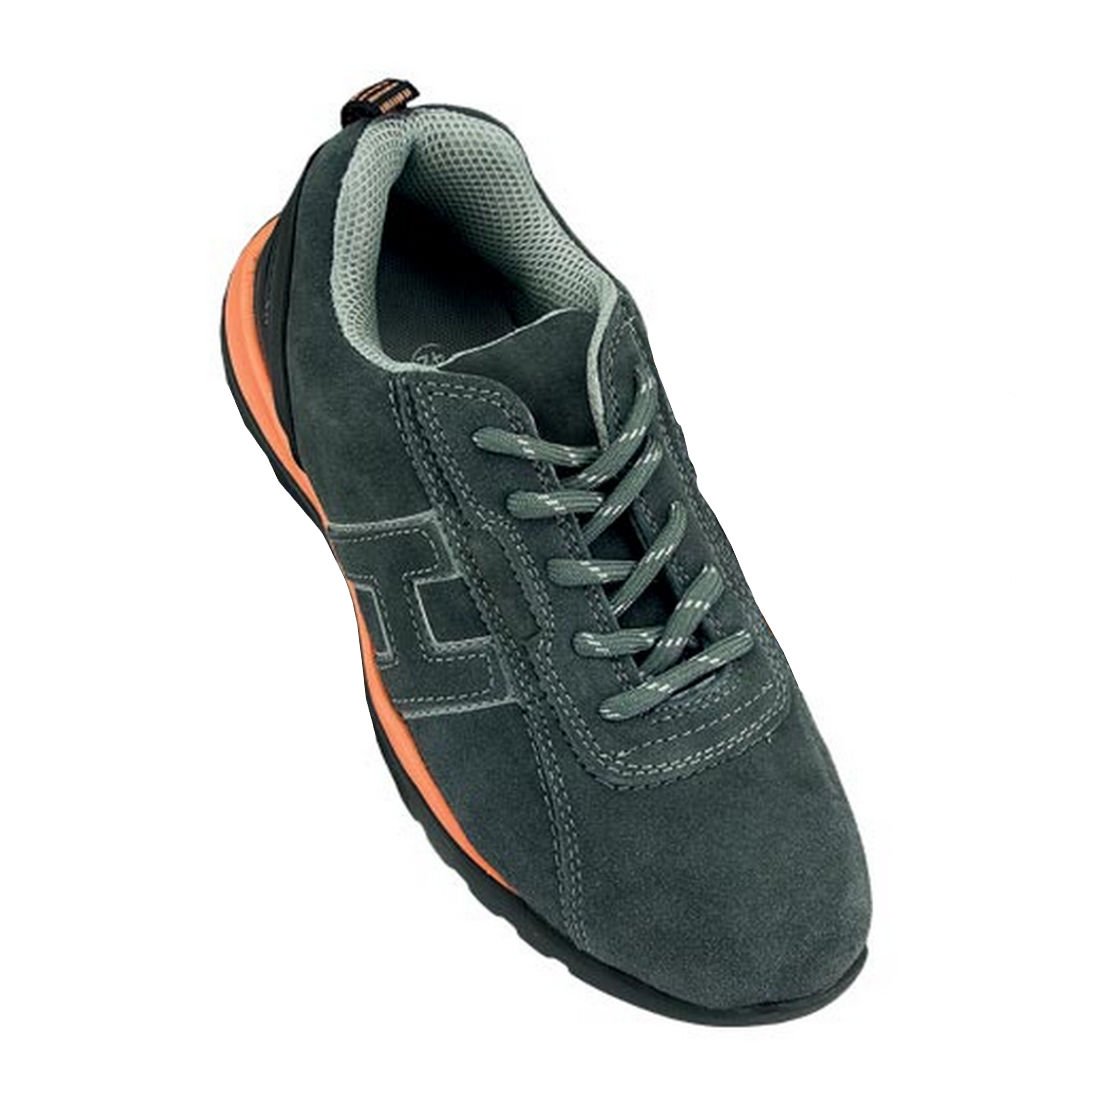 Reis Brneutron38 Sichere Schuhe, Grau-Orange, 38 Größe